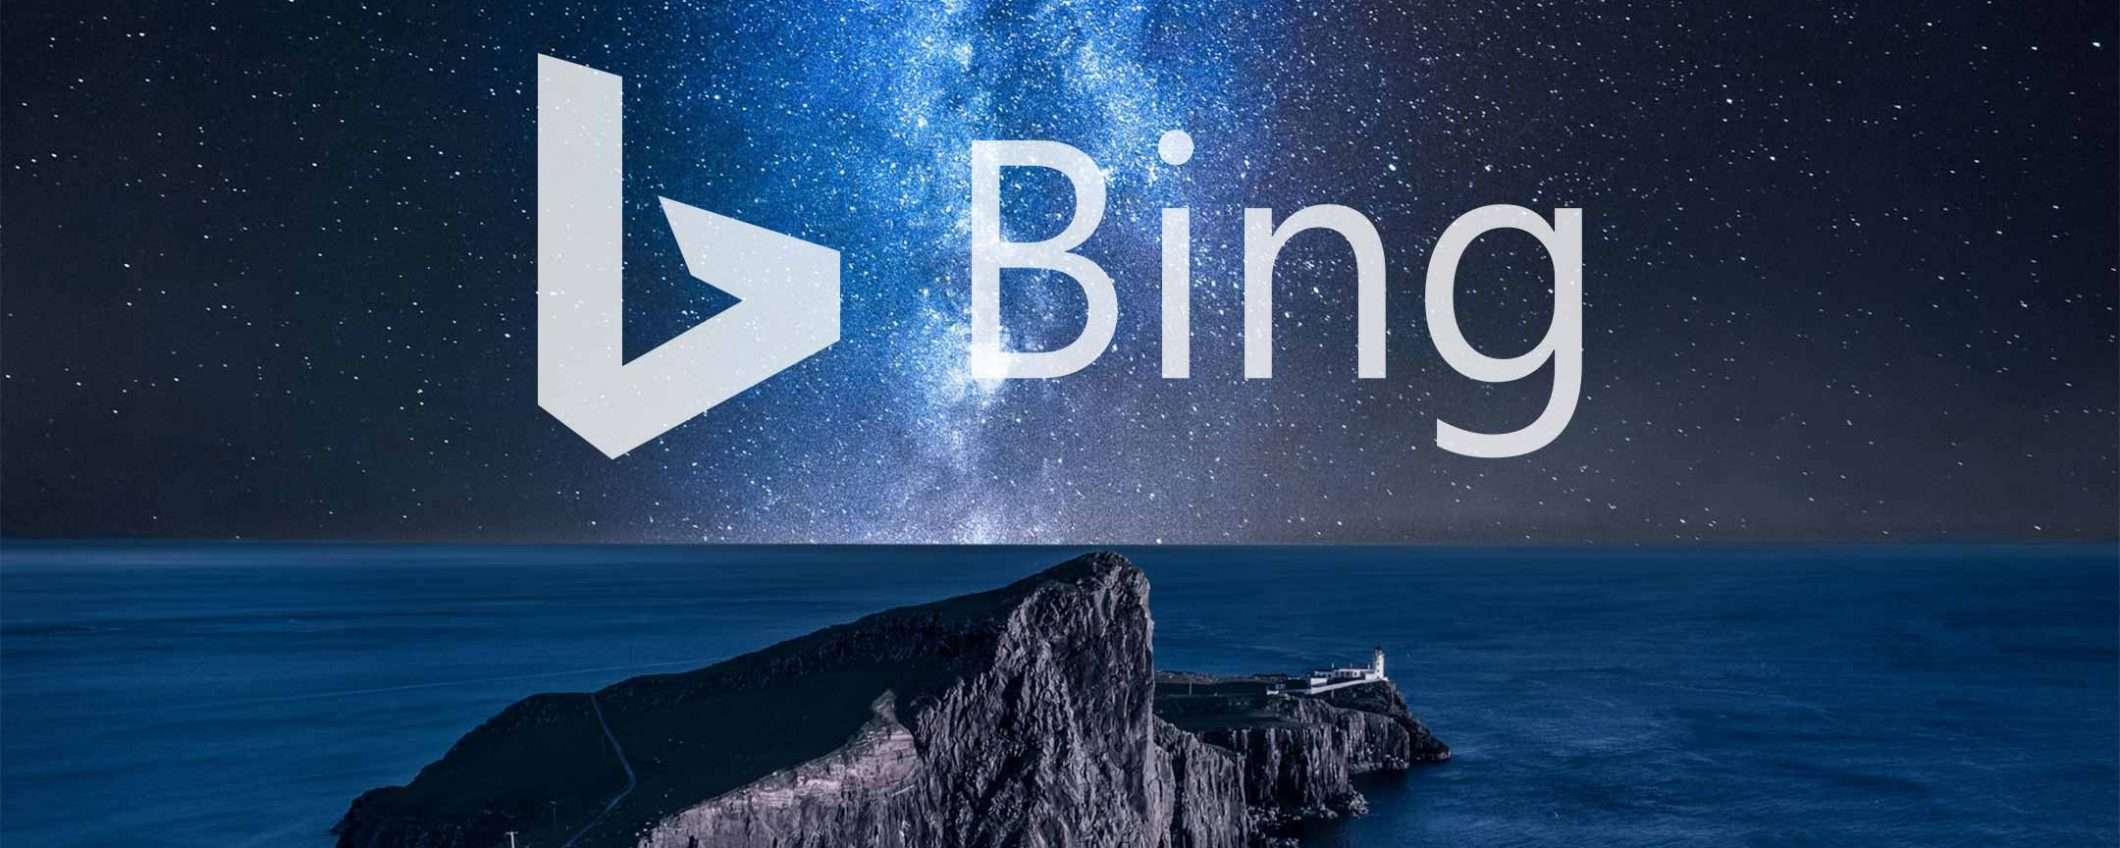 Bing Wallpaper arriva sul Microsoft Store (update)